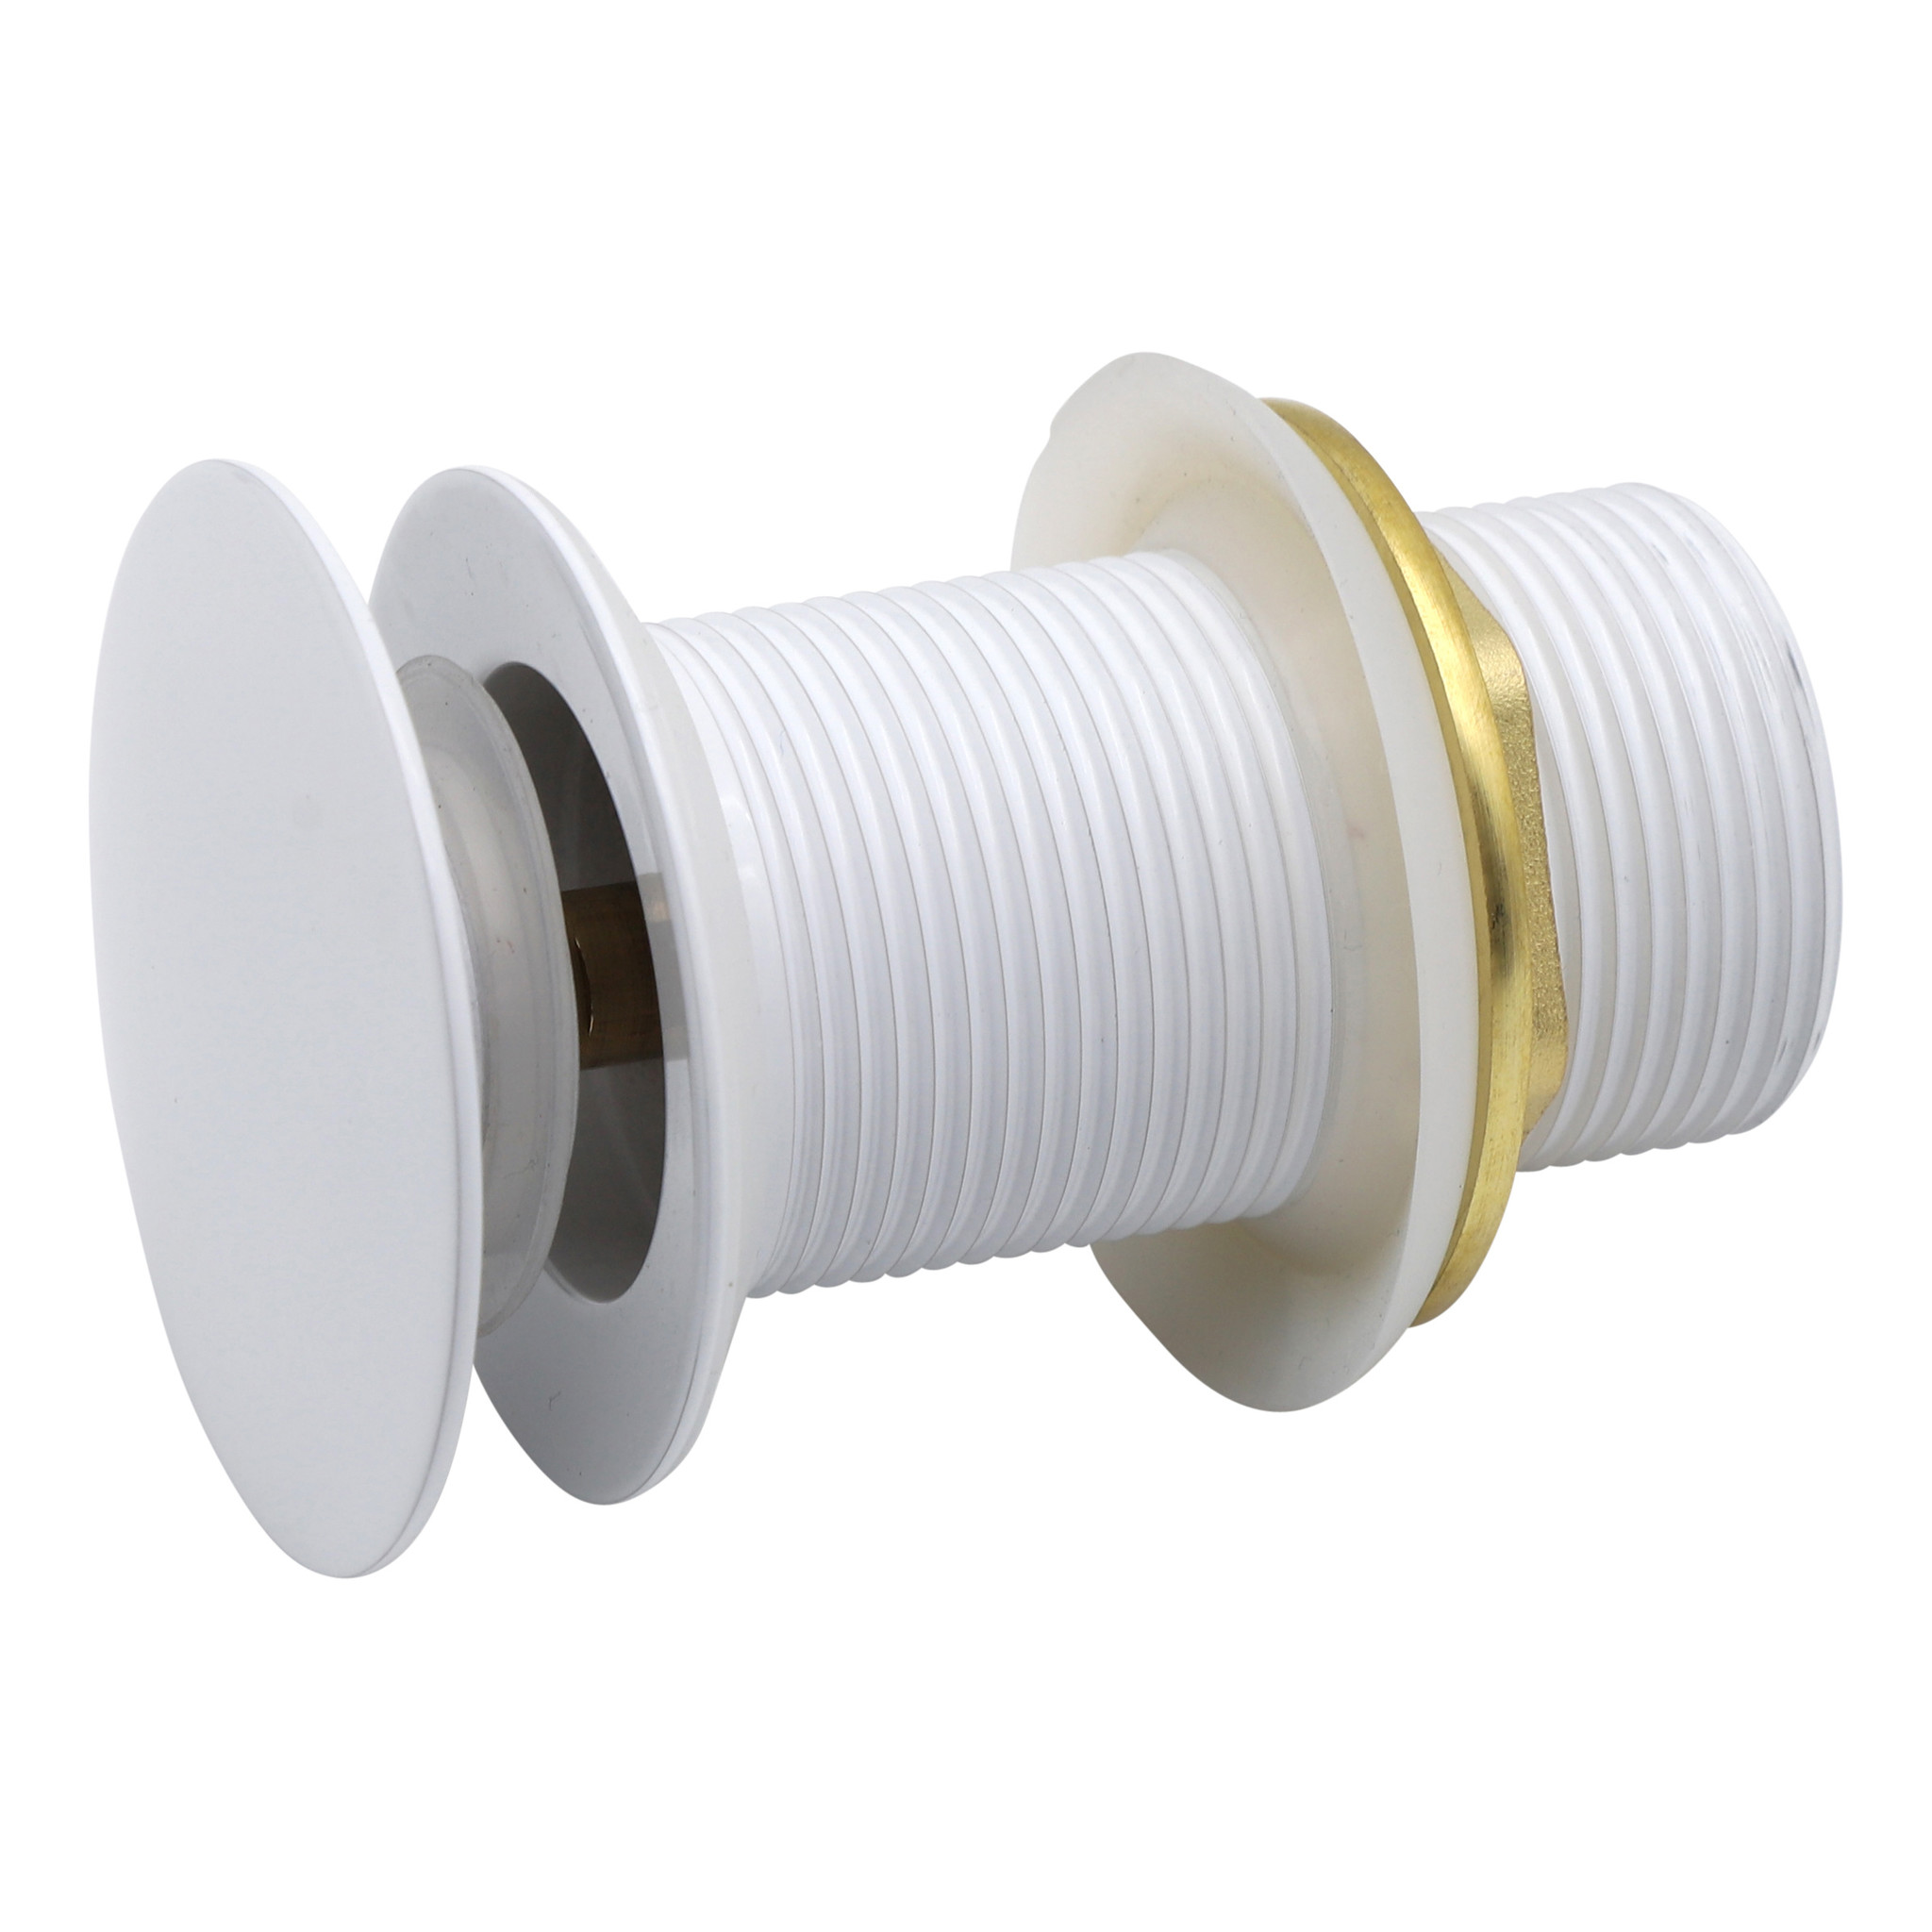 Indomarmer Pop-up Drain Plug with Long Shaft 9 cm White